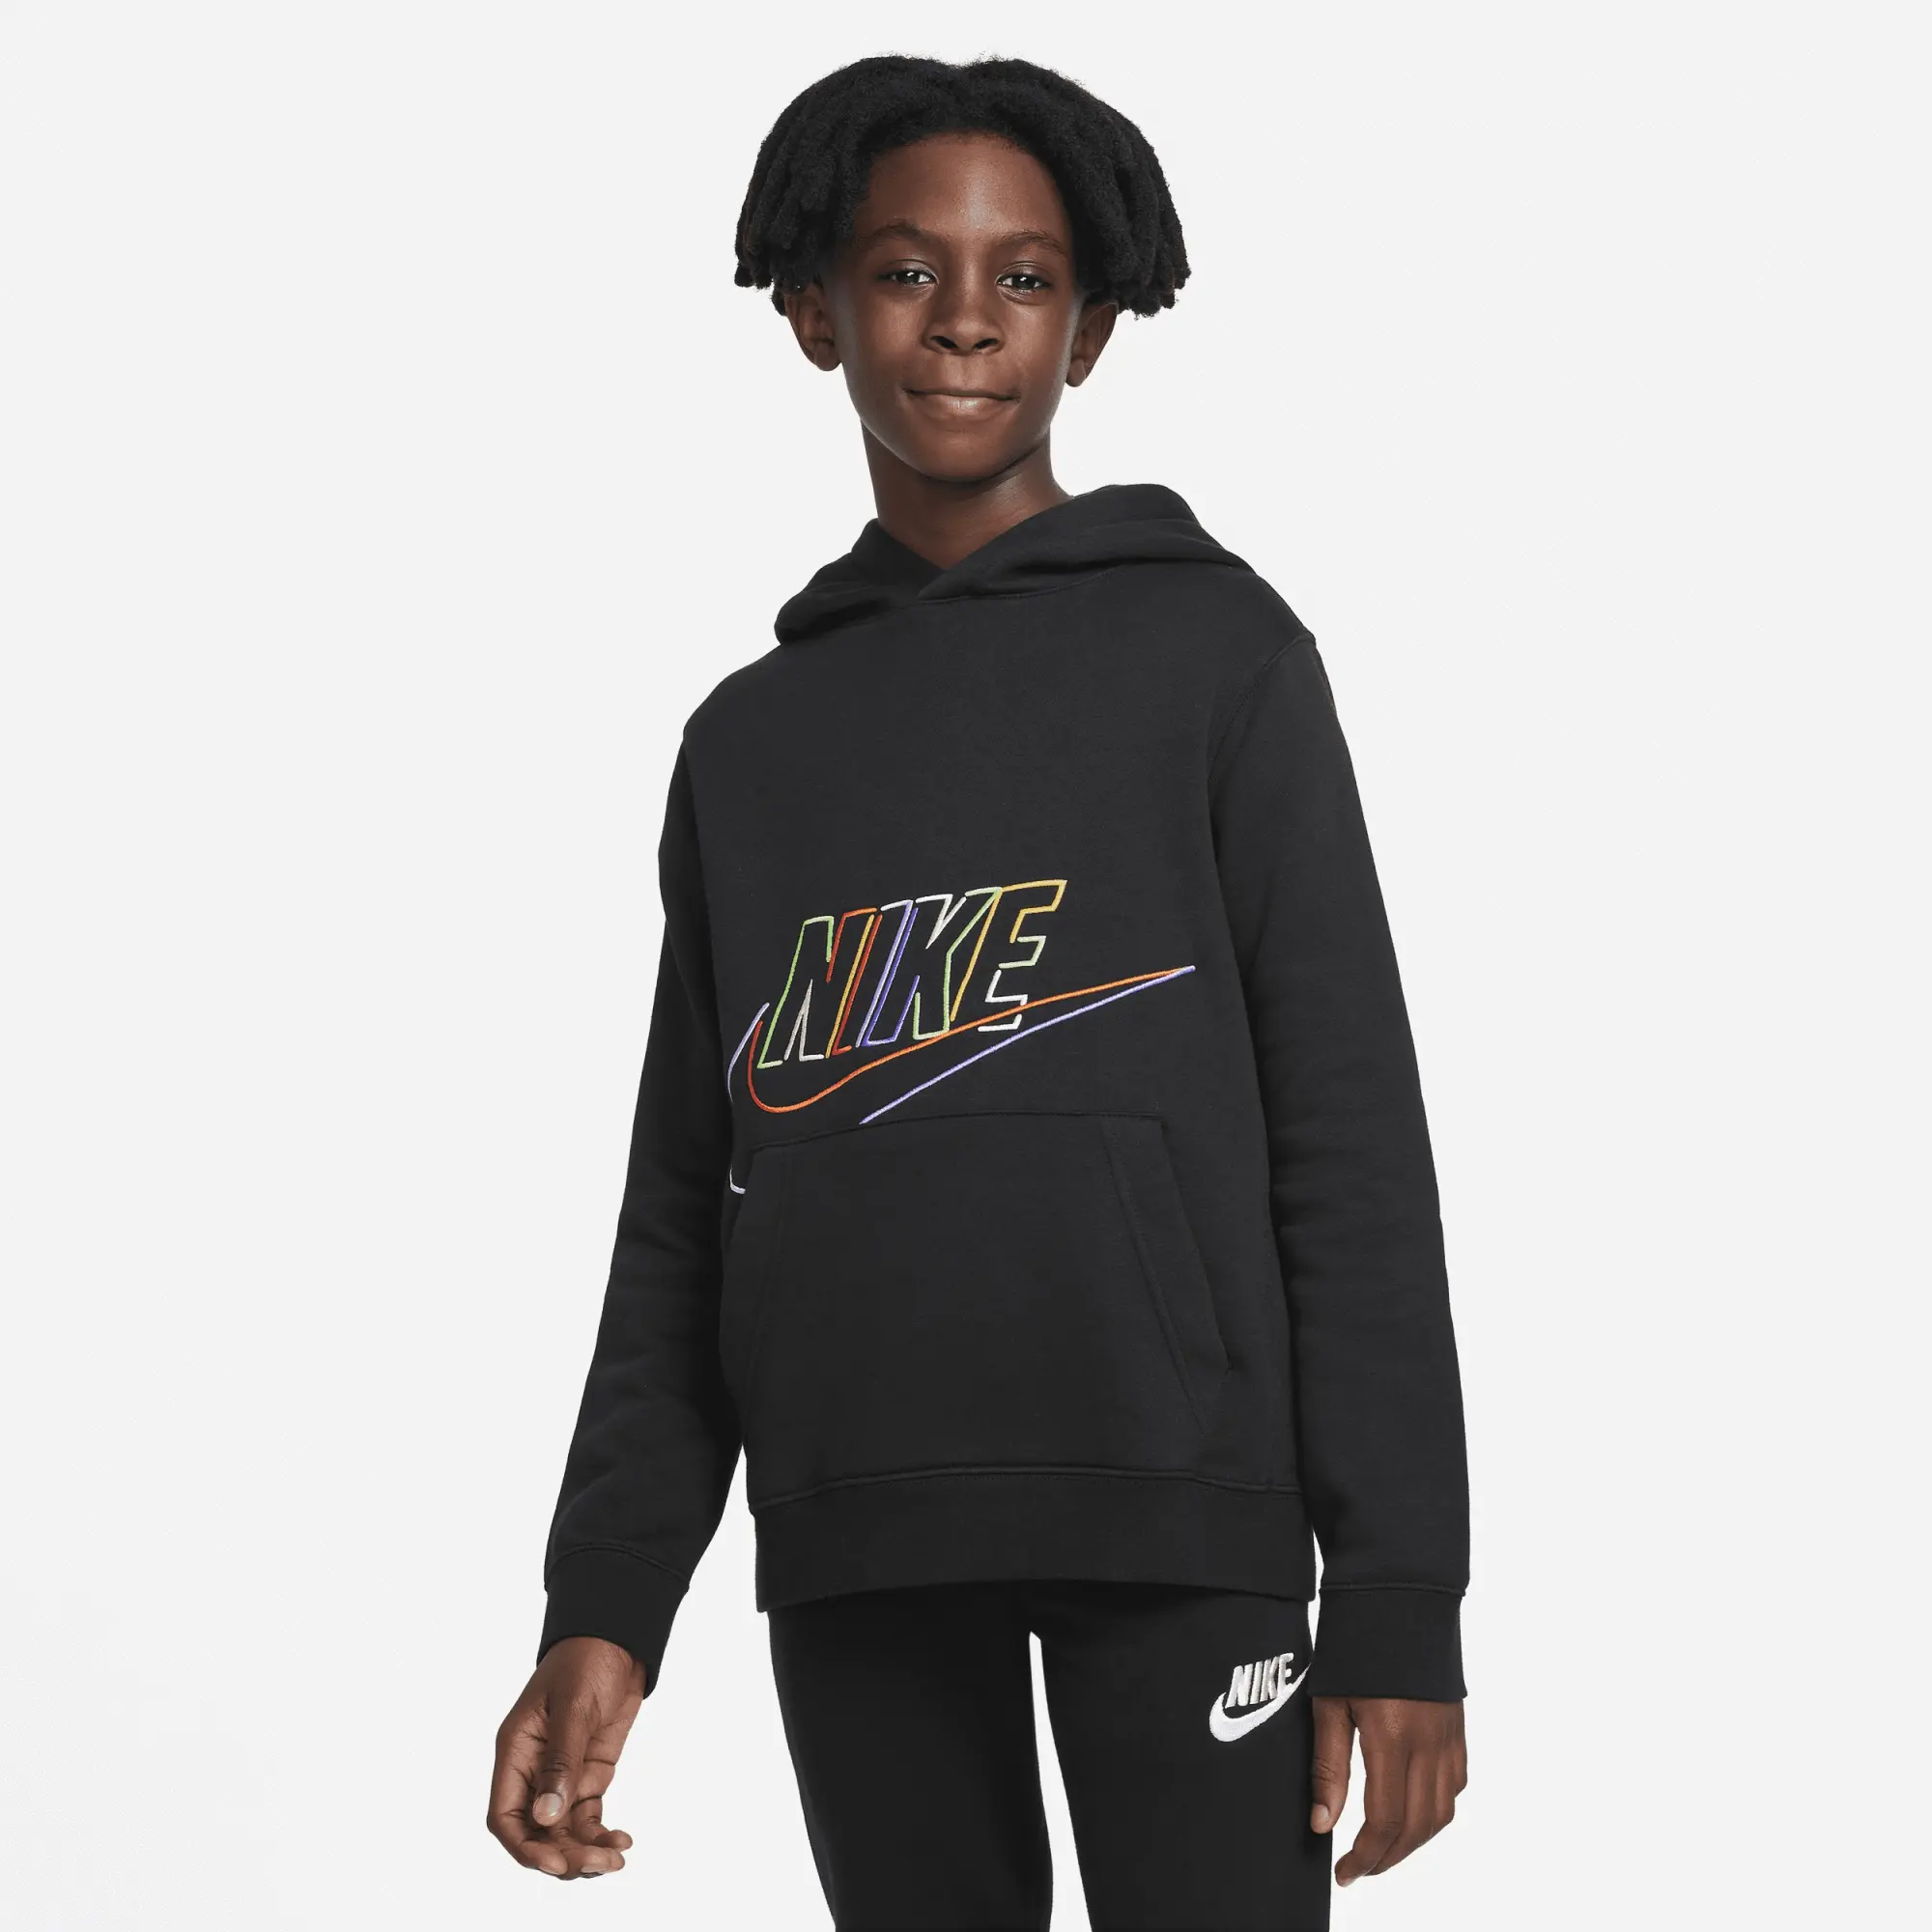 Nike Futura - Black